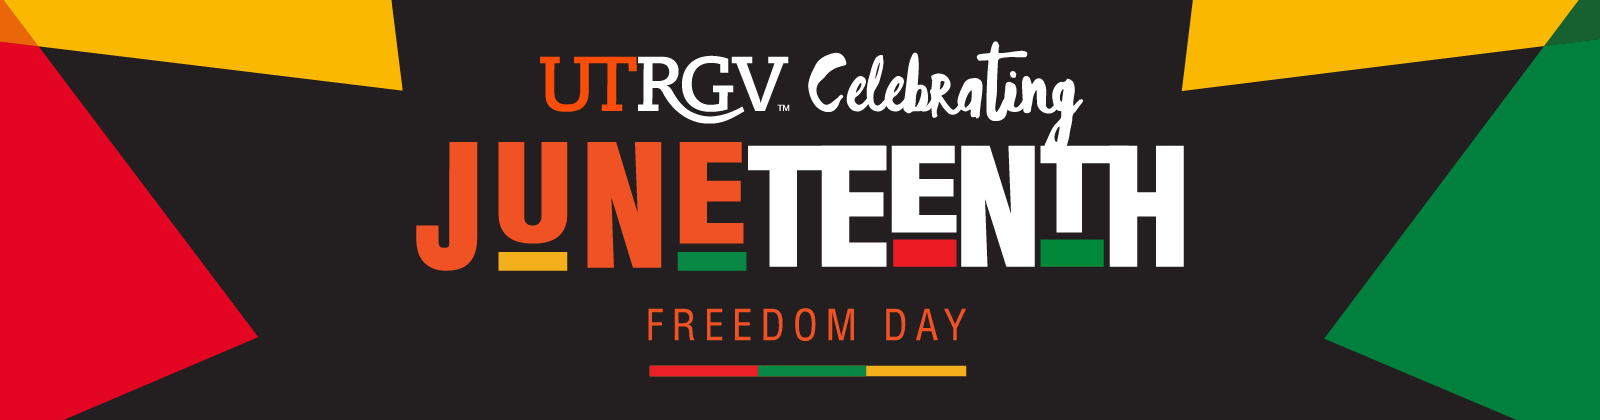 UTRGV Celebrating Juneteenth Freedom Day